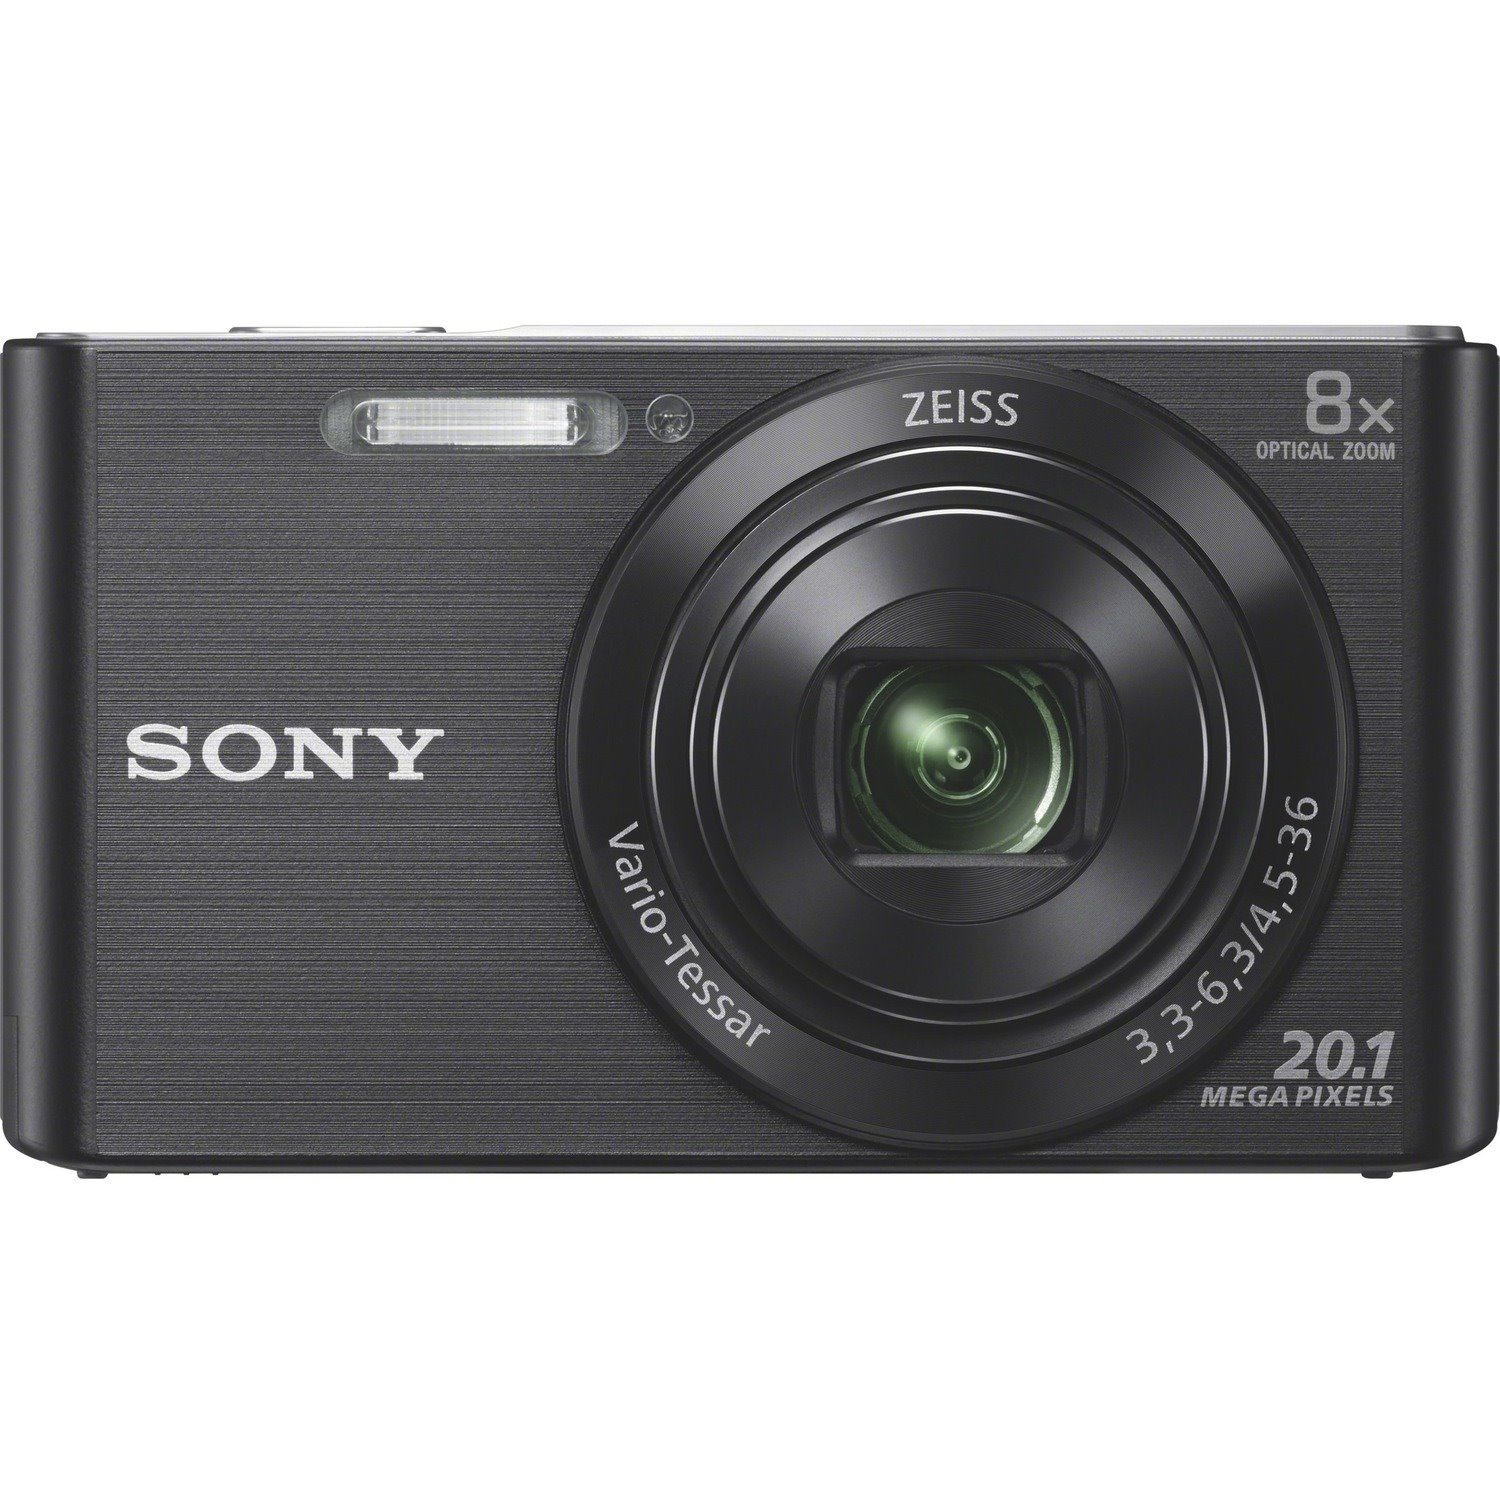 Sony Cyber-shot DSC-W830 20.1 Megapixel Compact Camera - Black